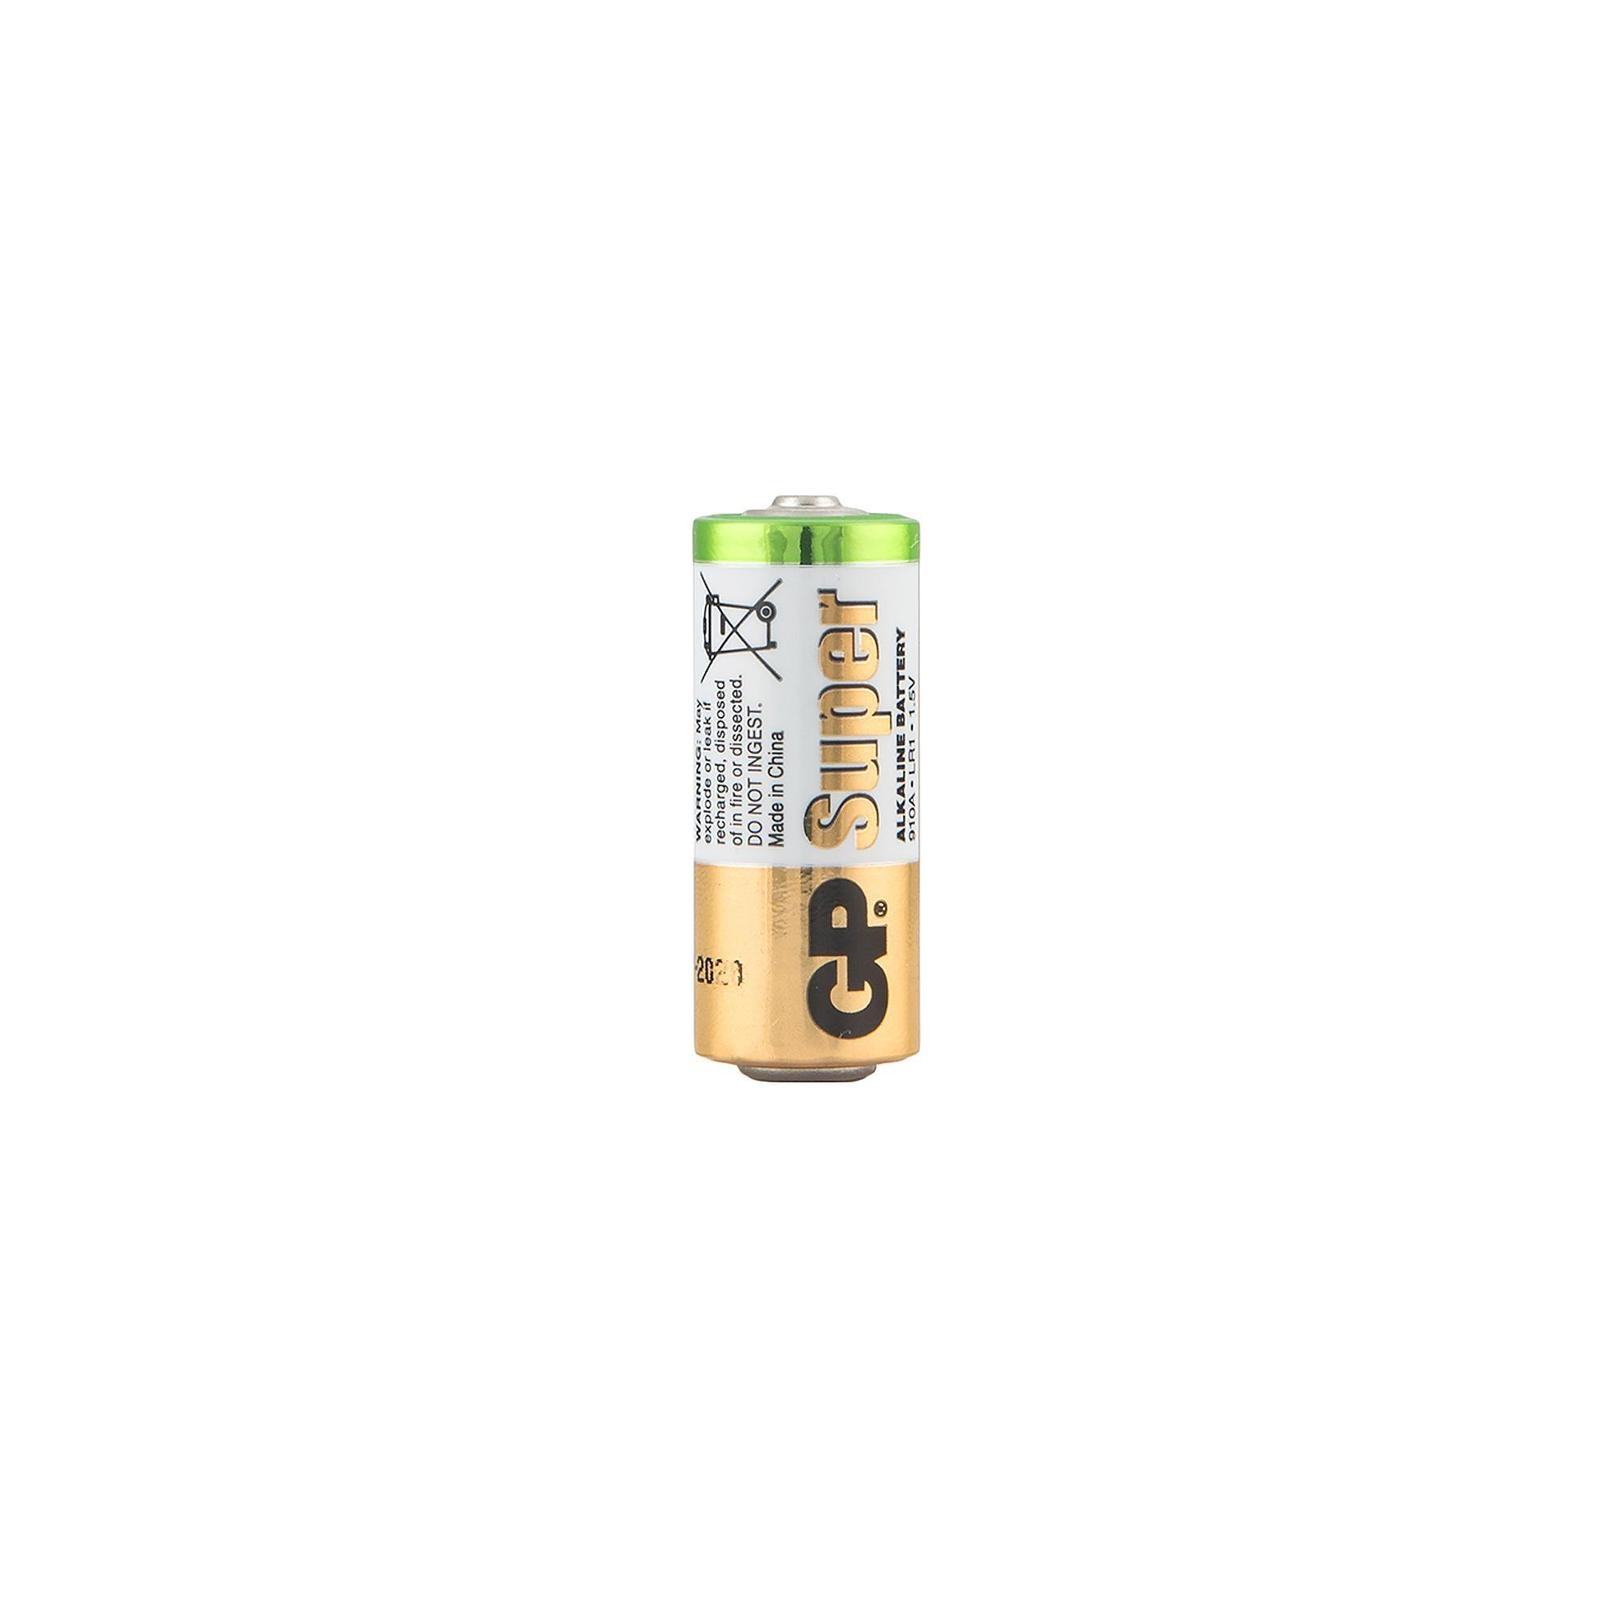 Батарейки литиевые GP типоразмера N (LR1/910A) 2 штуки в упаковке - фото 4